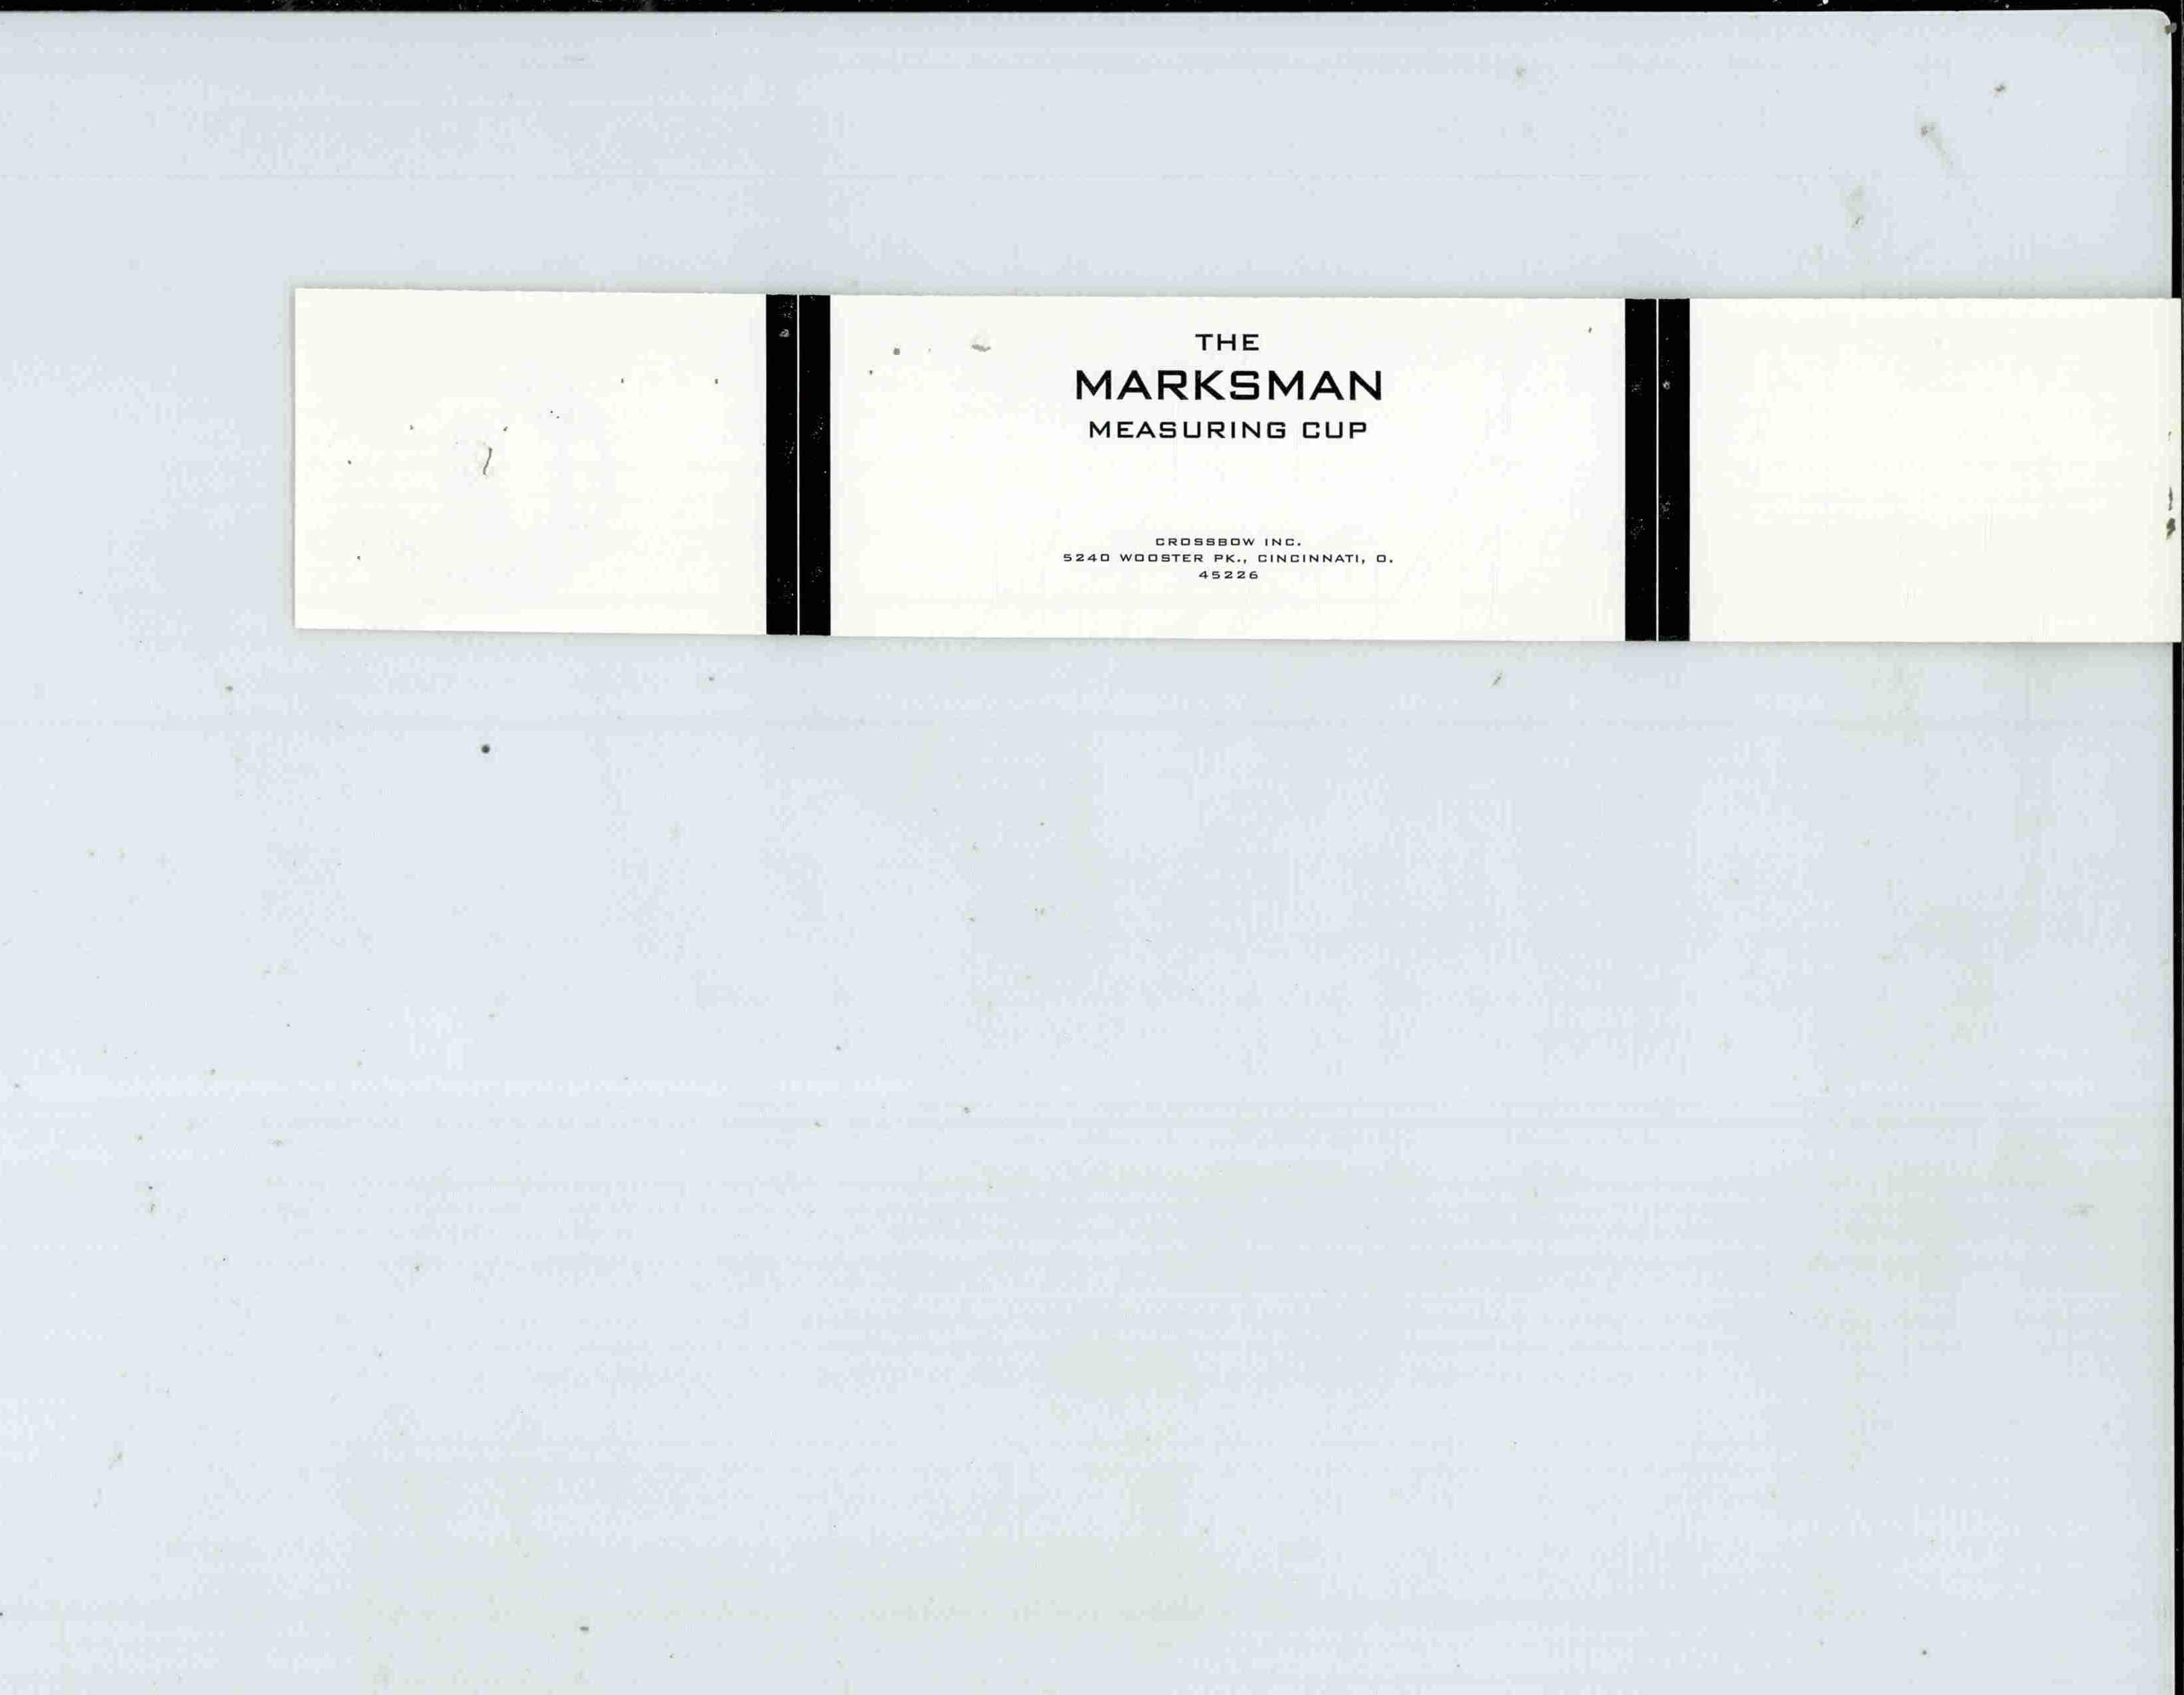 THE MARKSMAN